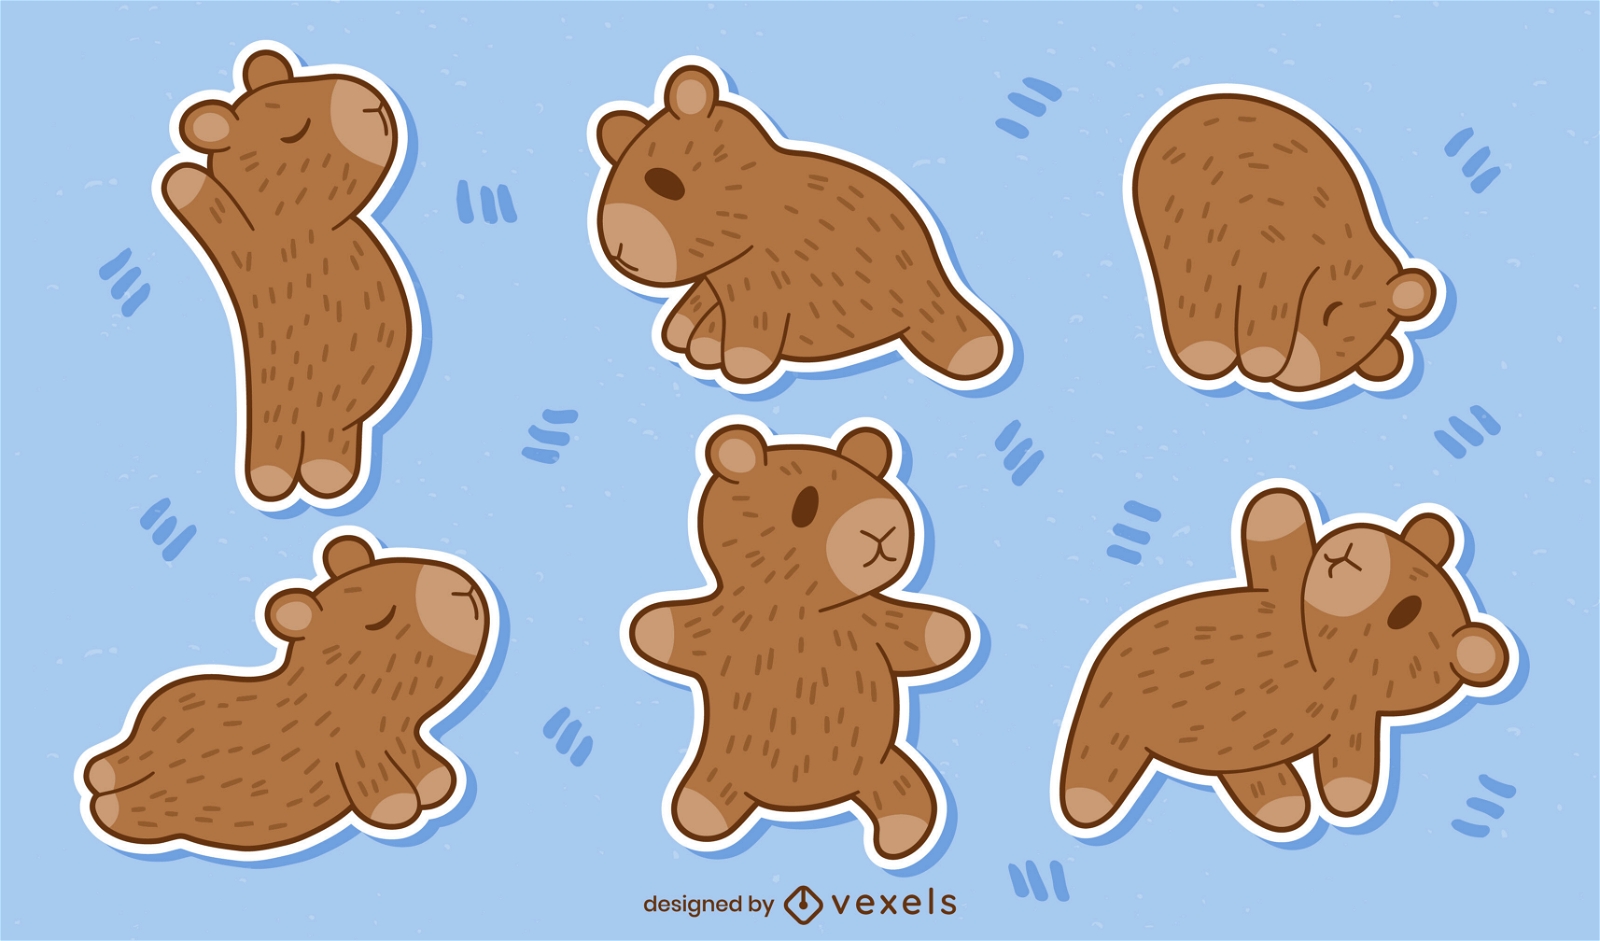 Capybara-Yoga-Zeichensatz